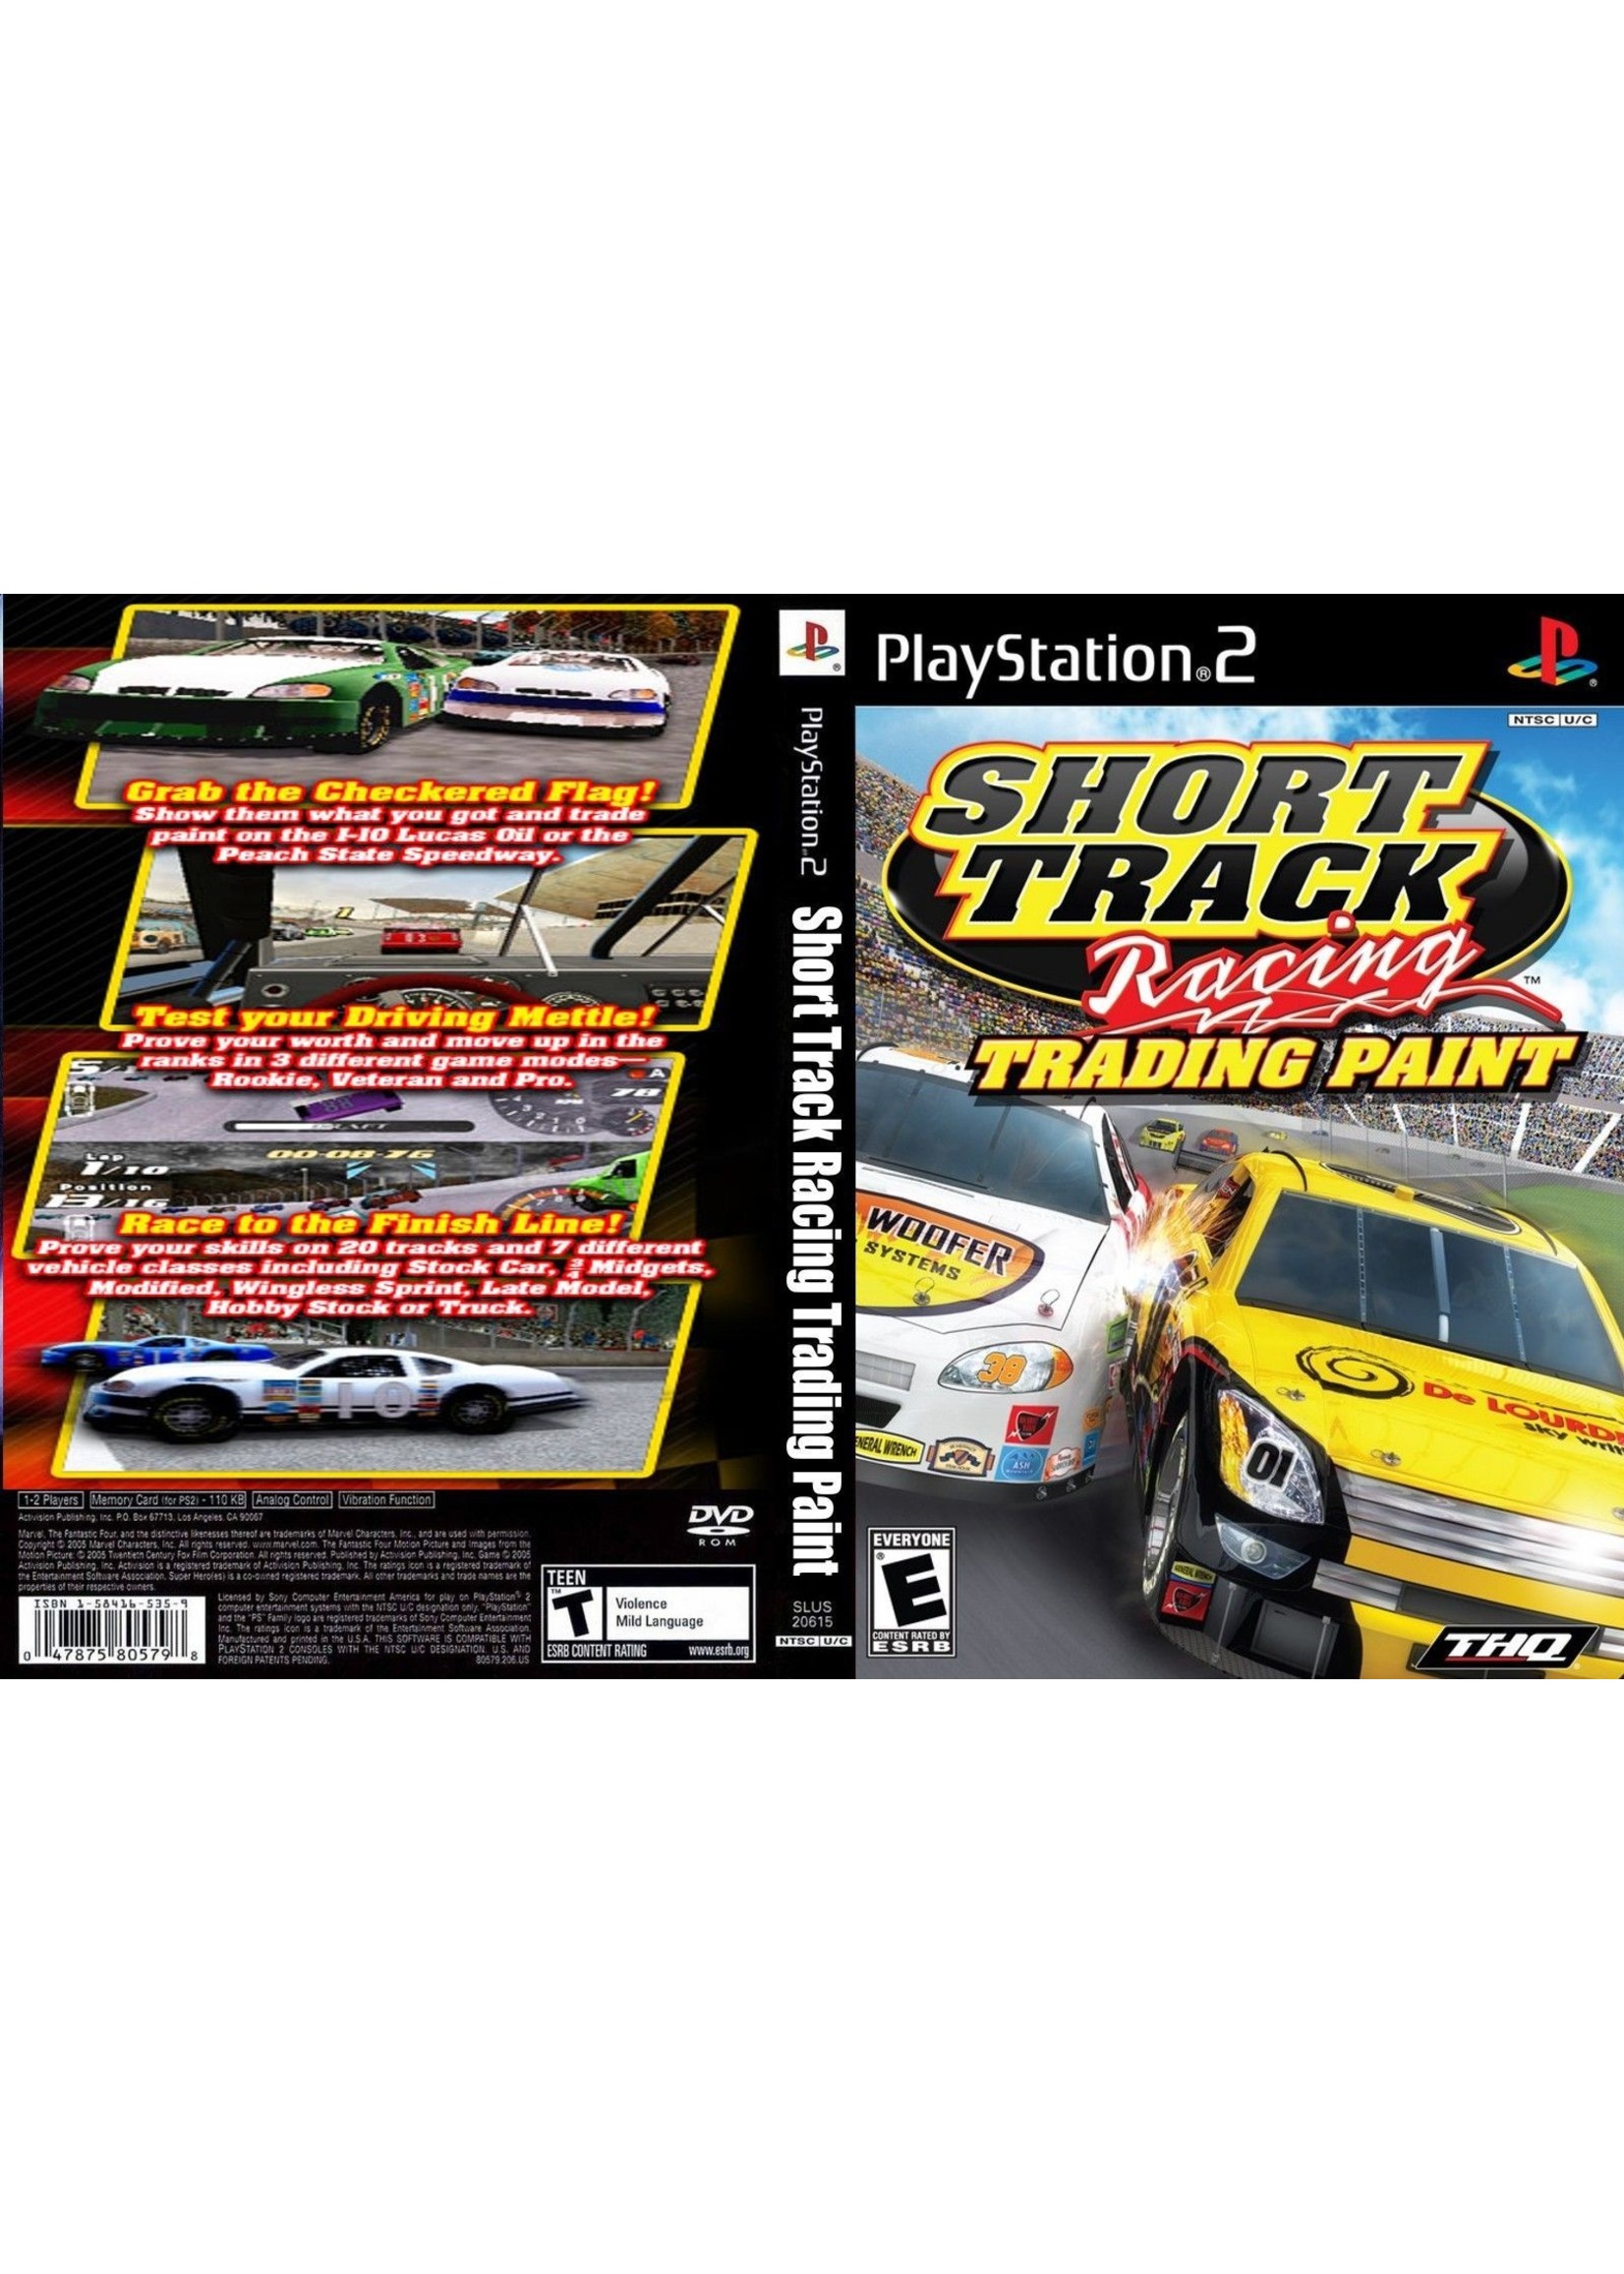 Sony Playstation 2 (PS2) Short Track Racing